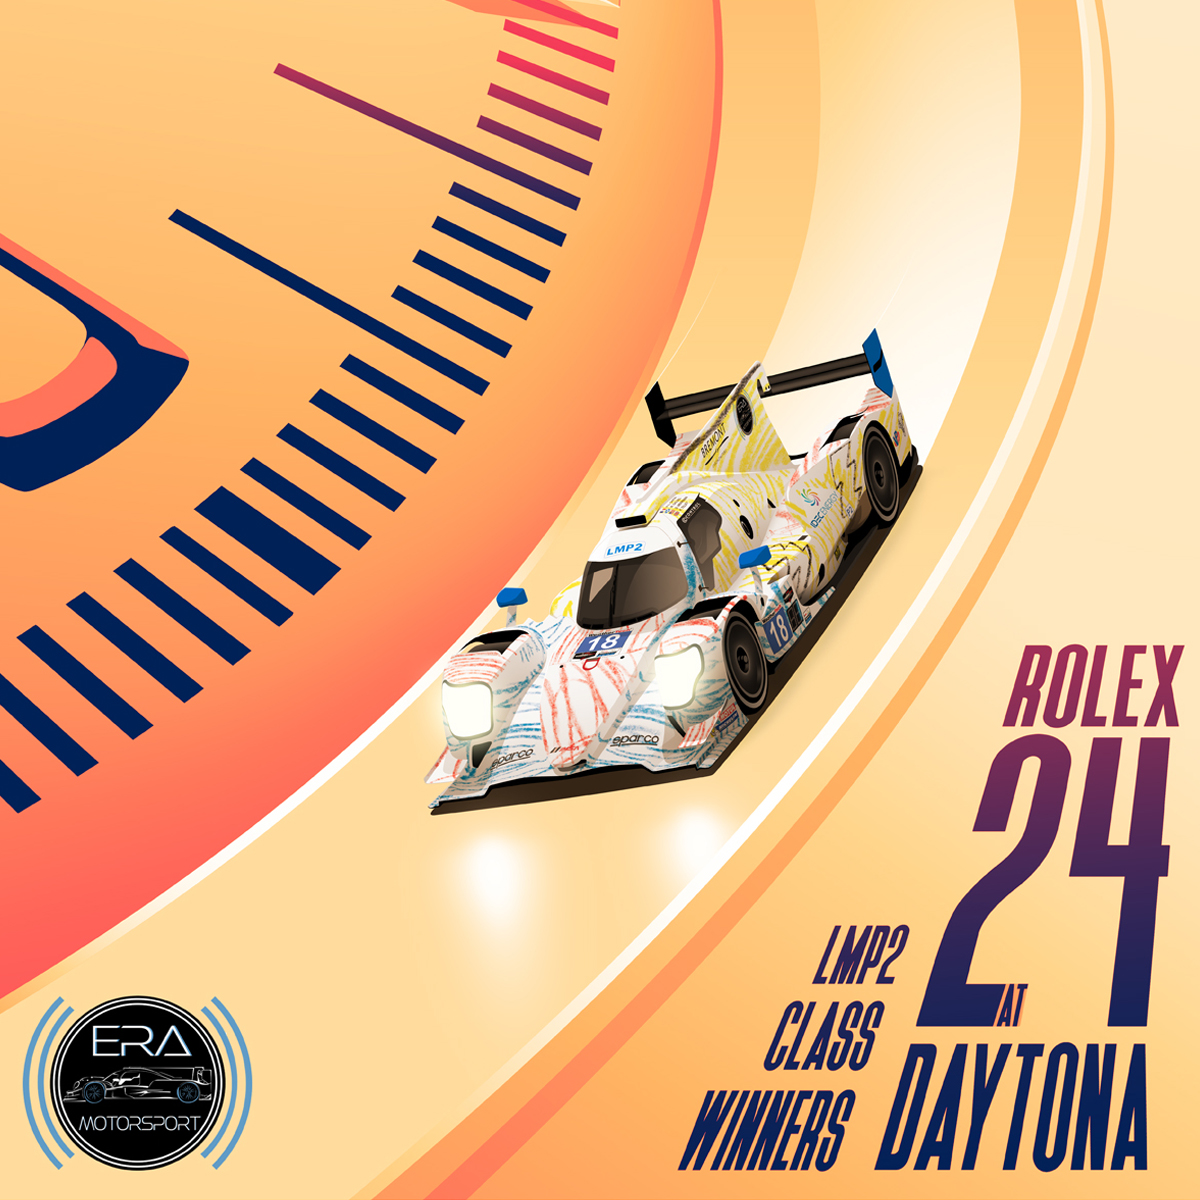 Rolex 24 at Daytona Poster Era Motorsport JAMES GIBSON